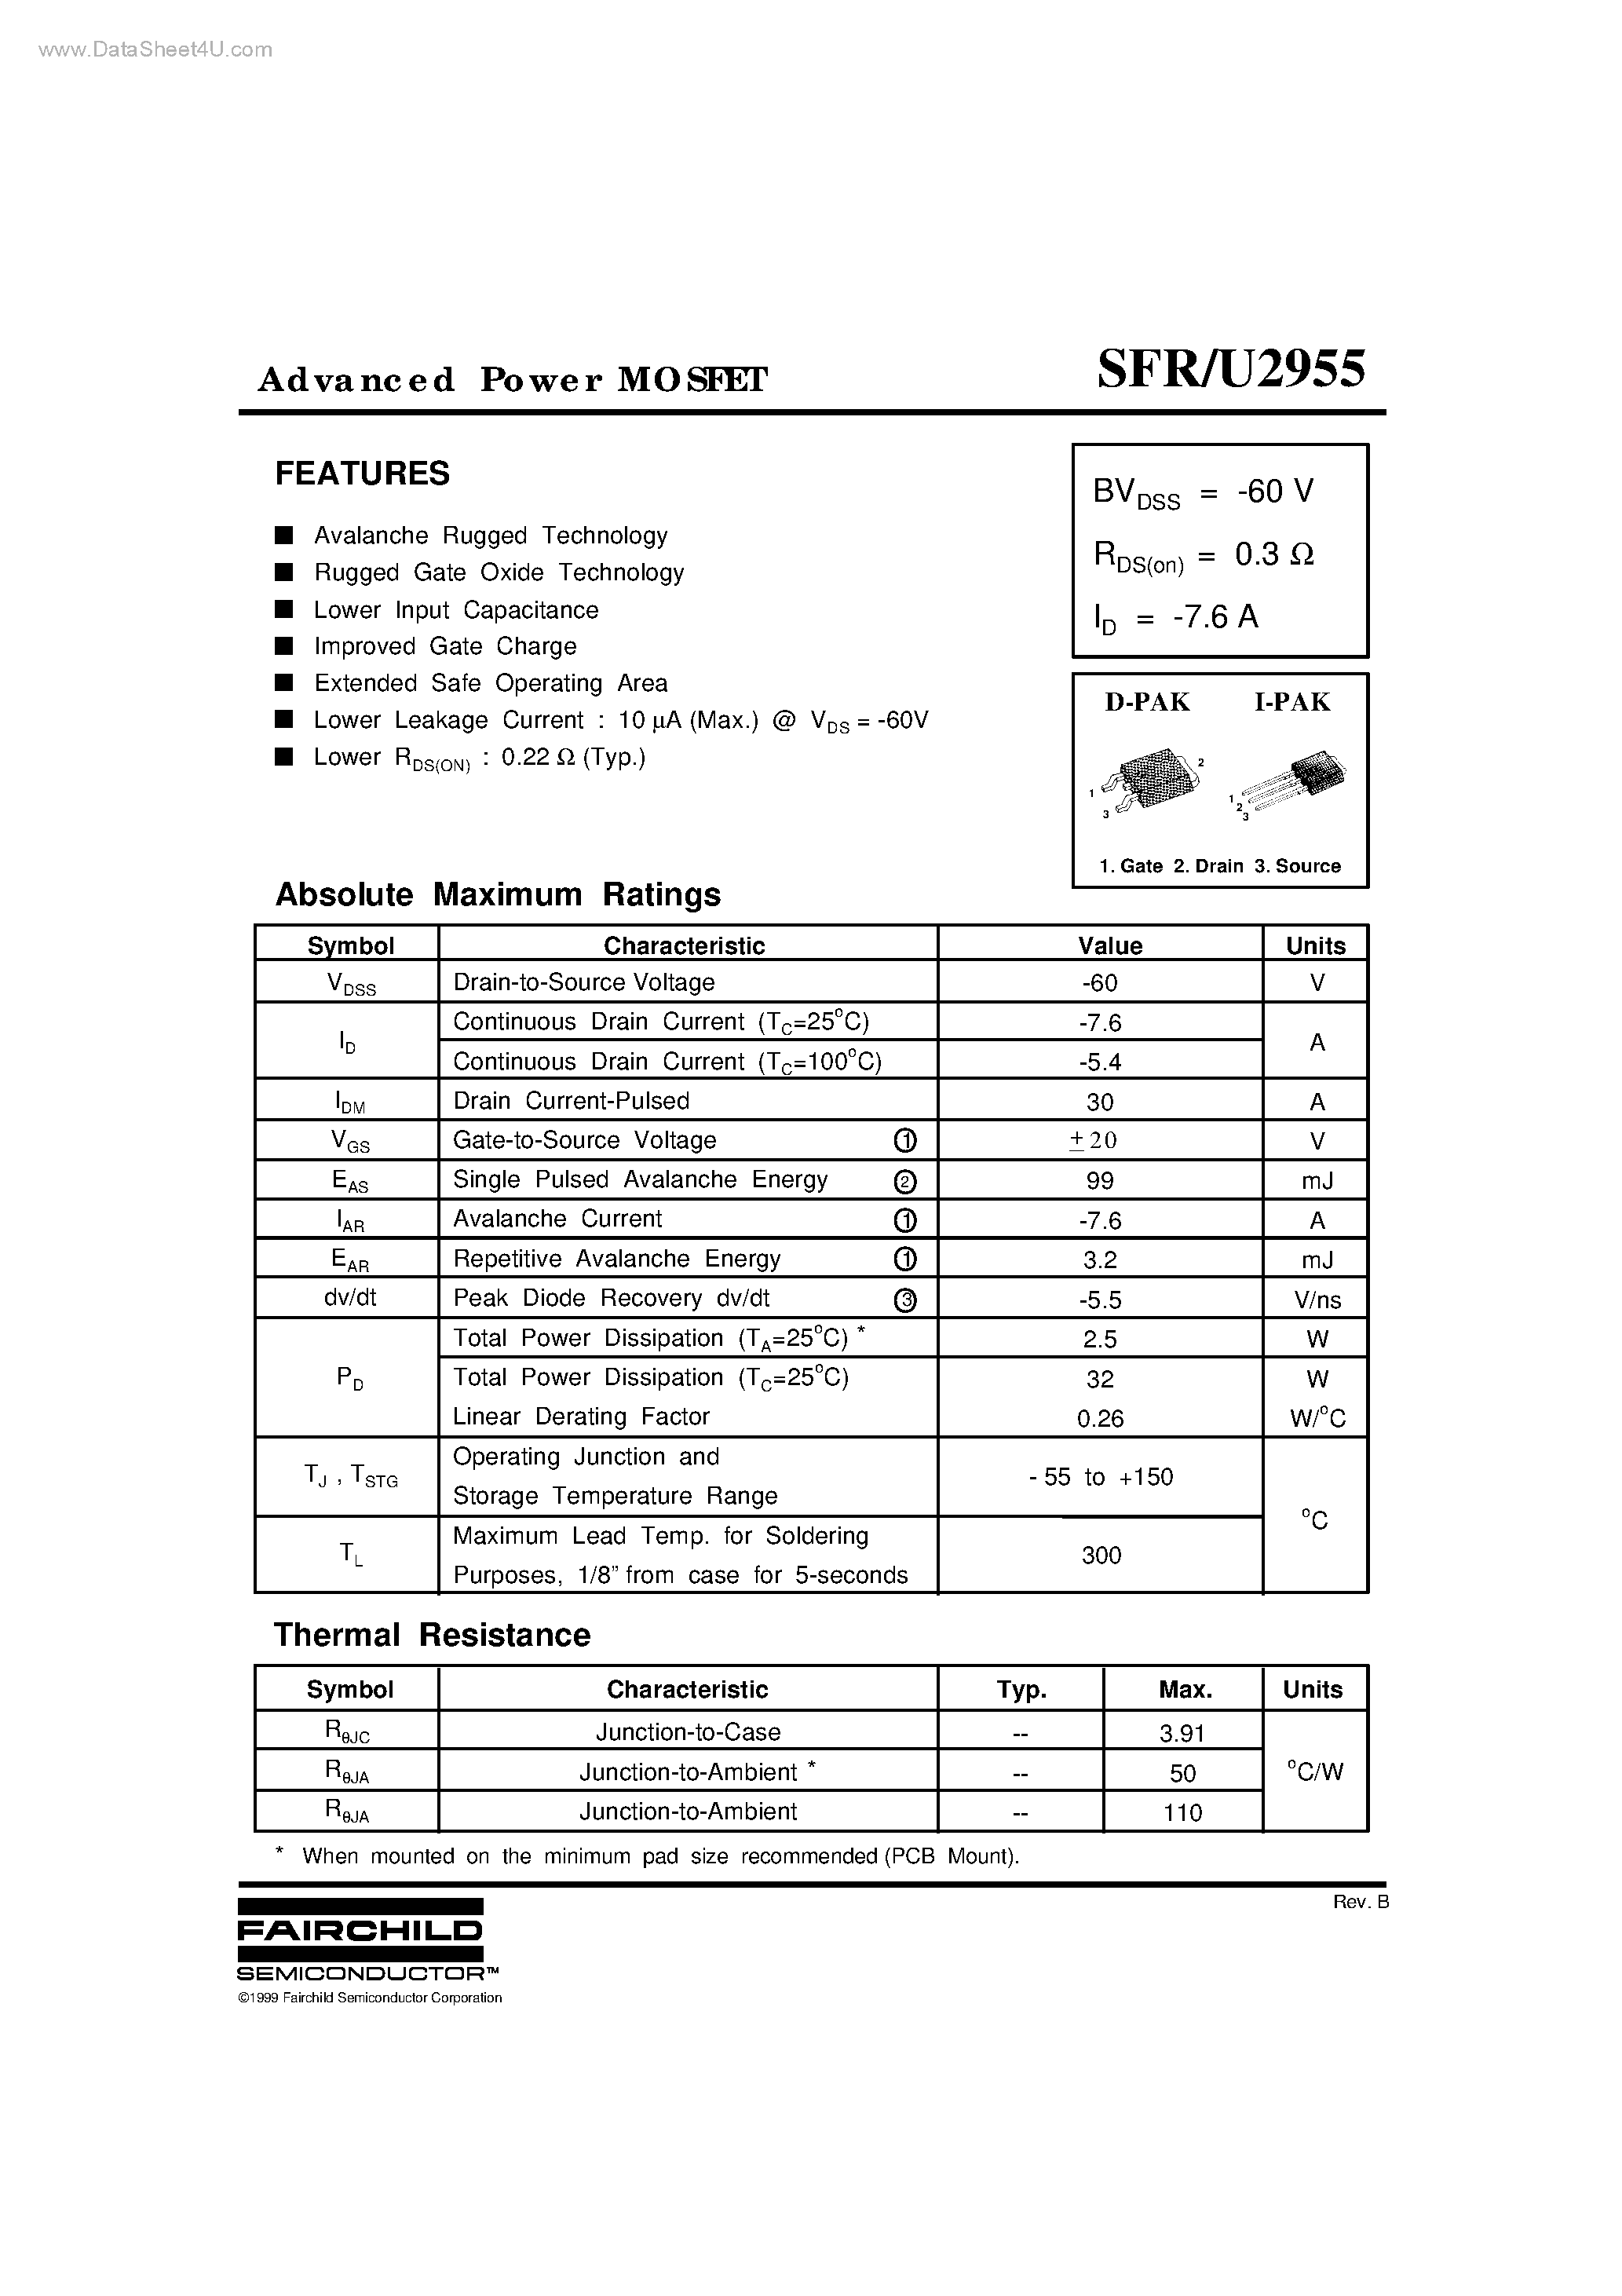 Datasheet SFR2955 - Advanced Power MOSFET page 1